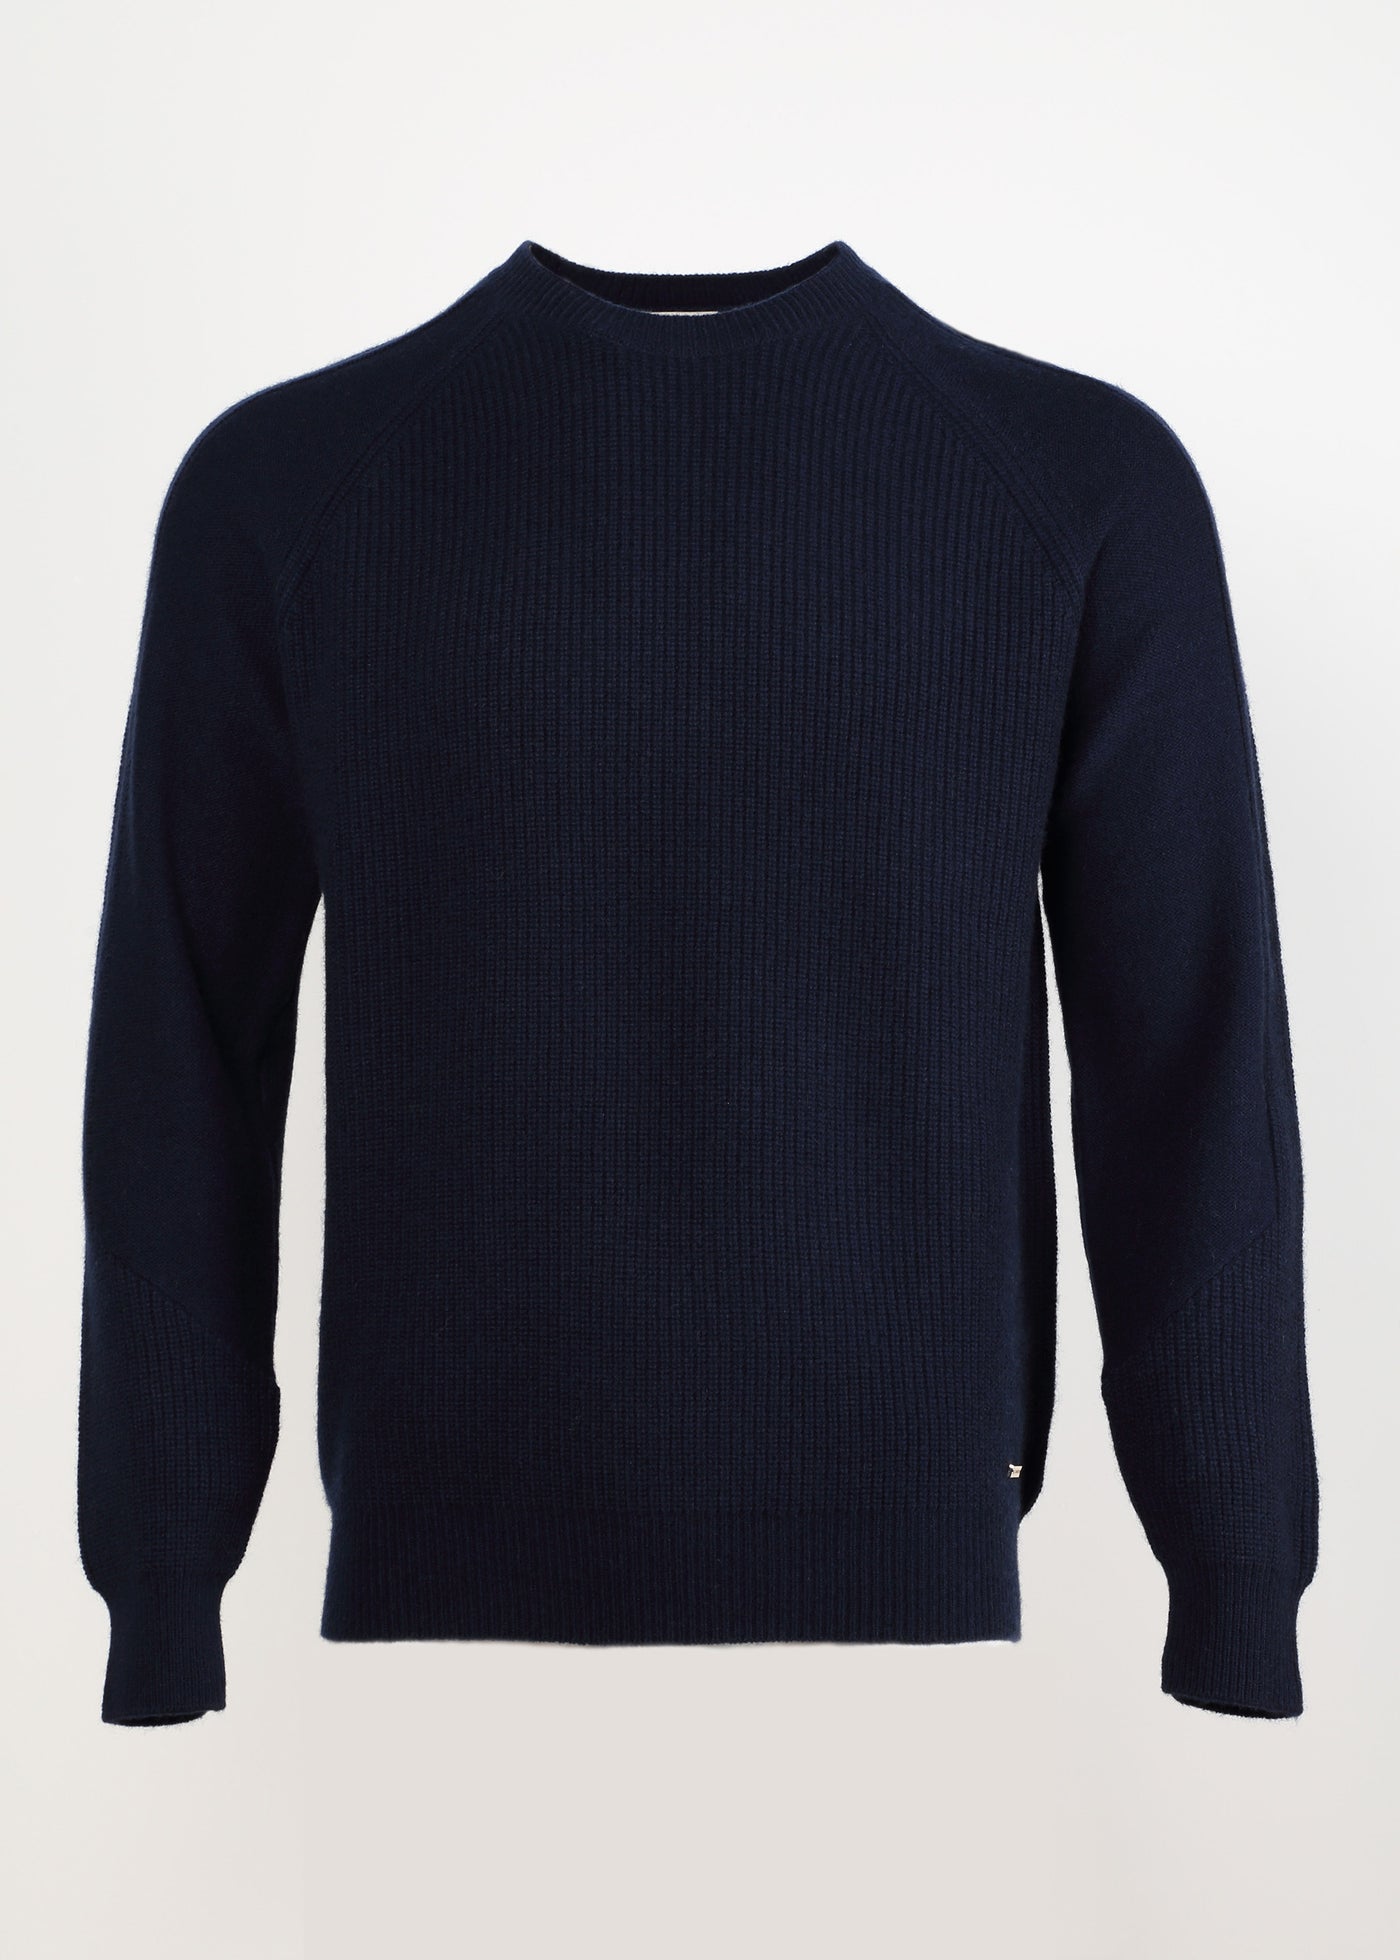 Men's Round Neck Cashmere Pullover